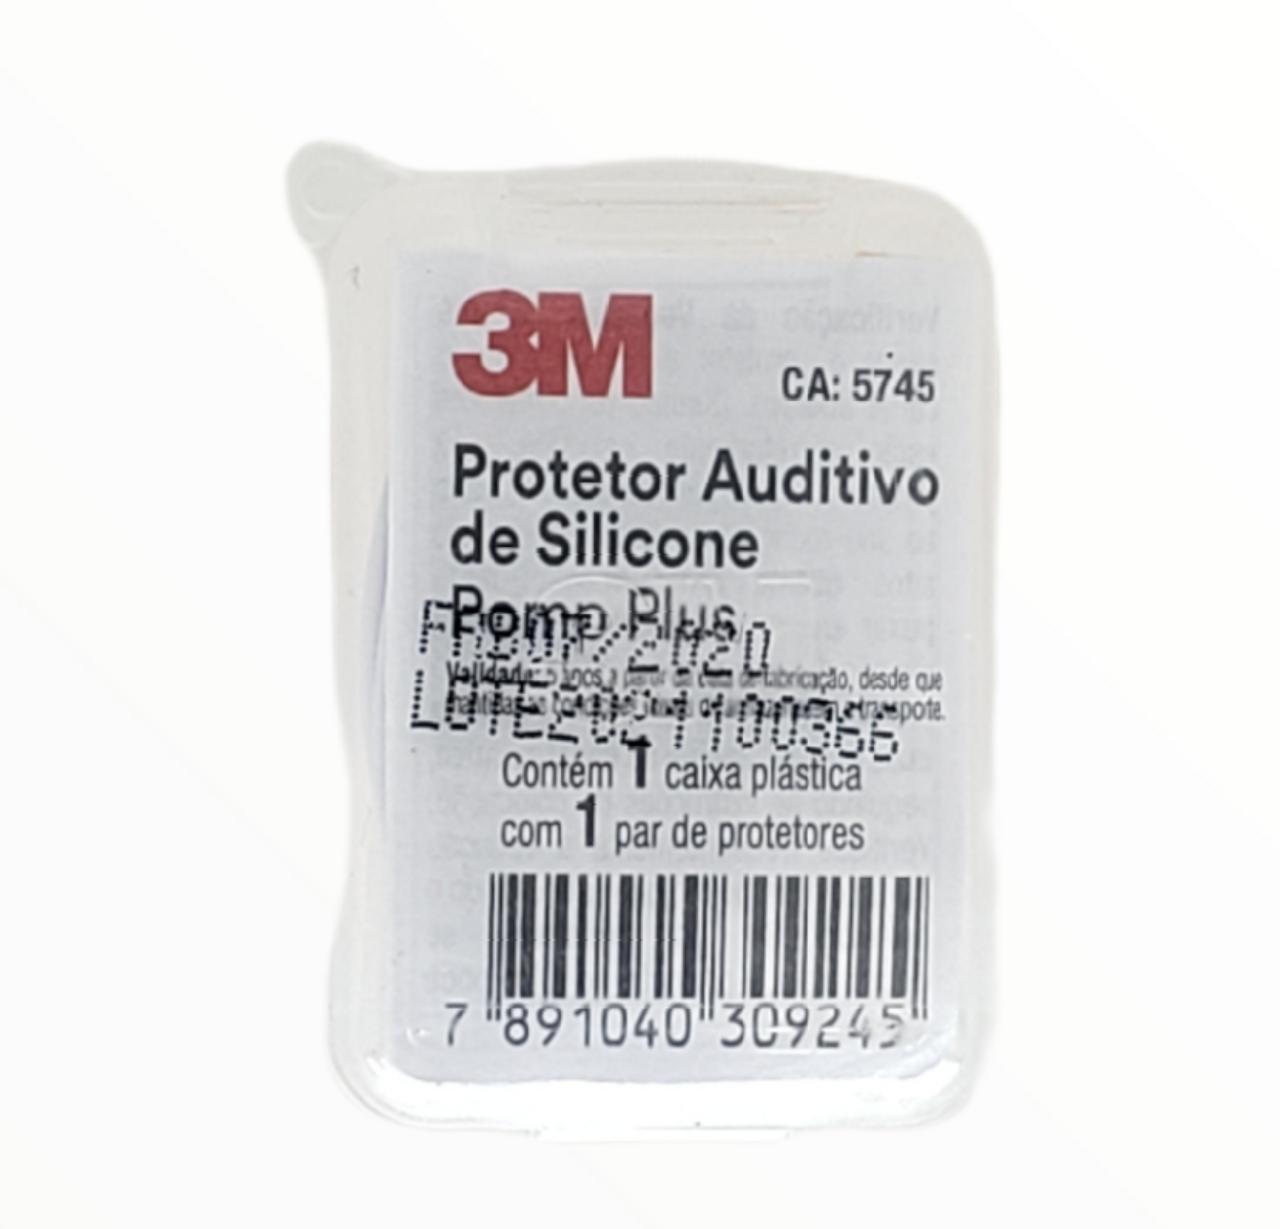 Protetor Auricular Pomp Plus C/Cordao Branco Ca 5745 3M                                                                 